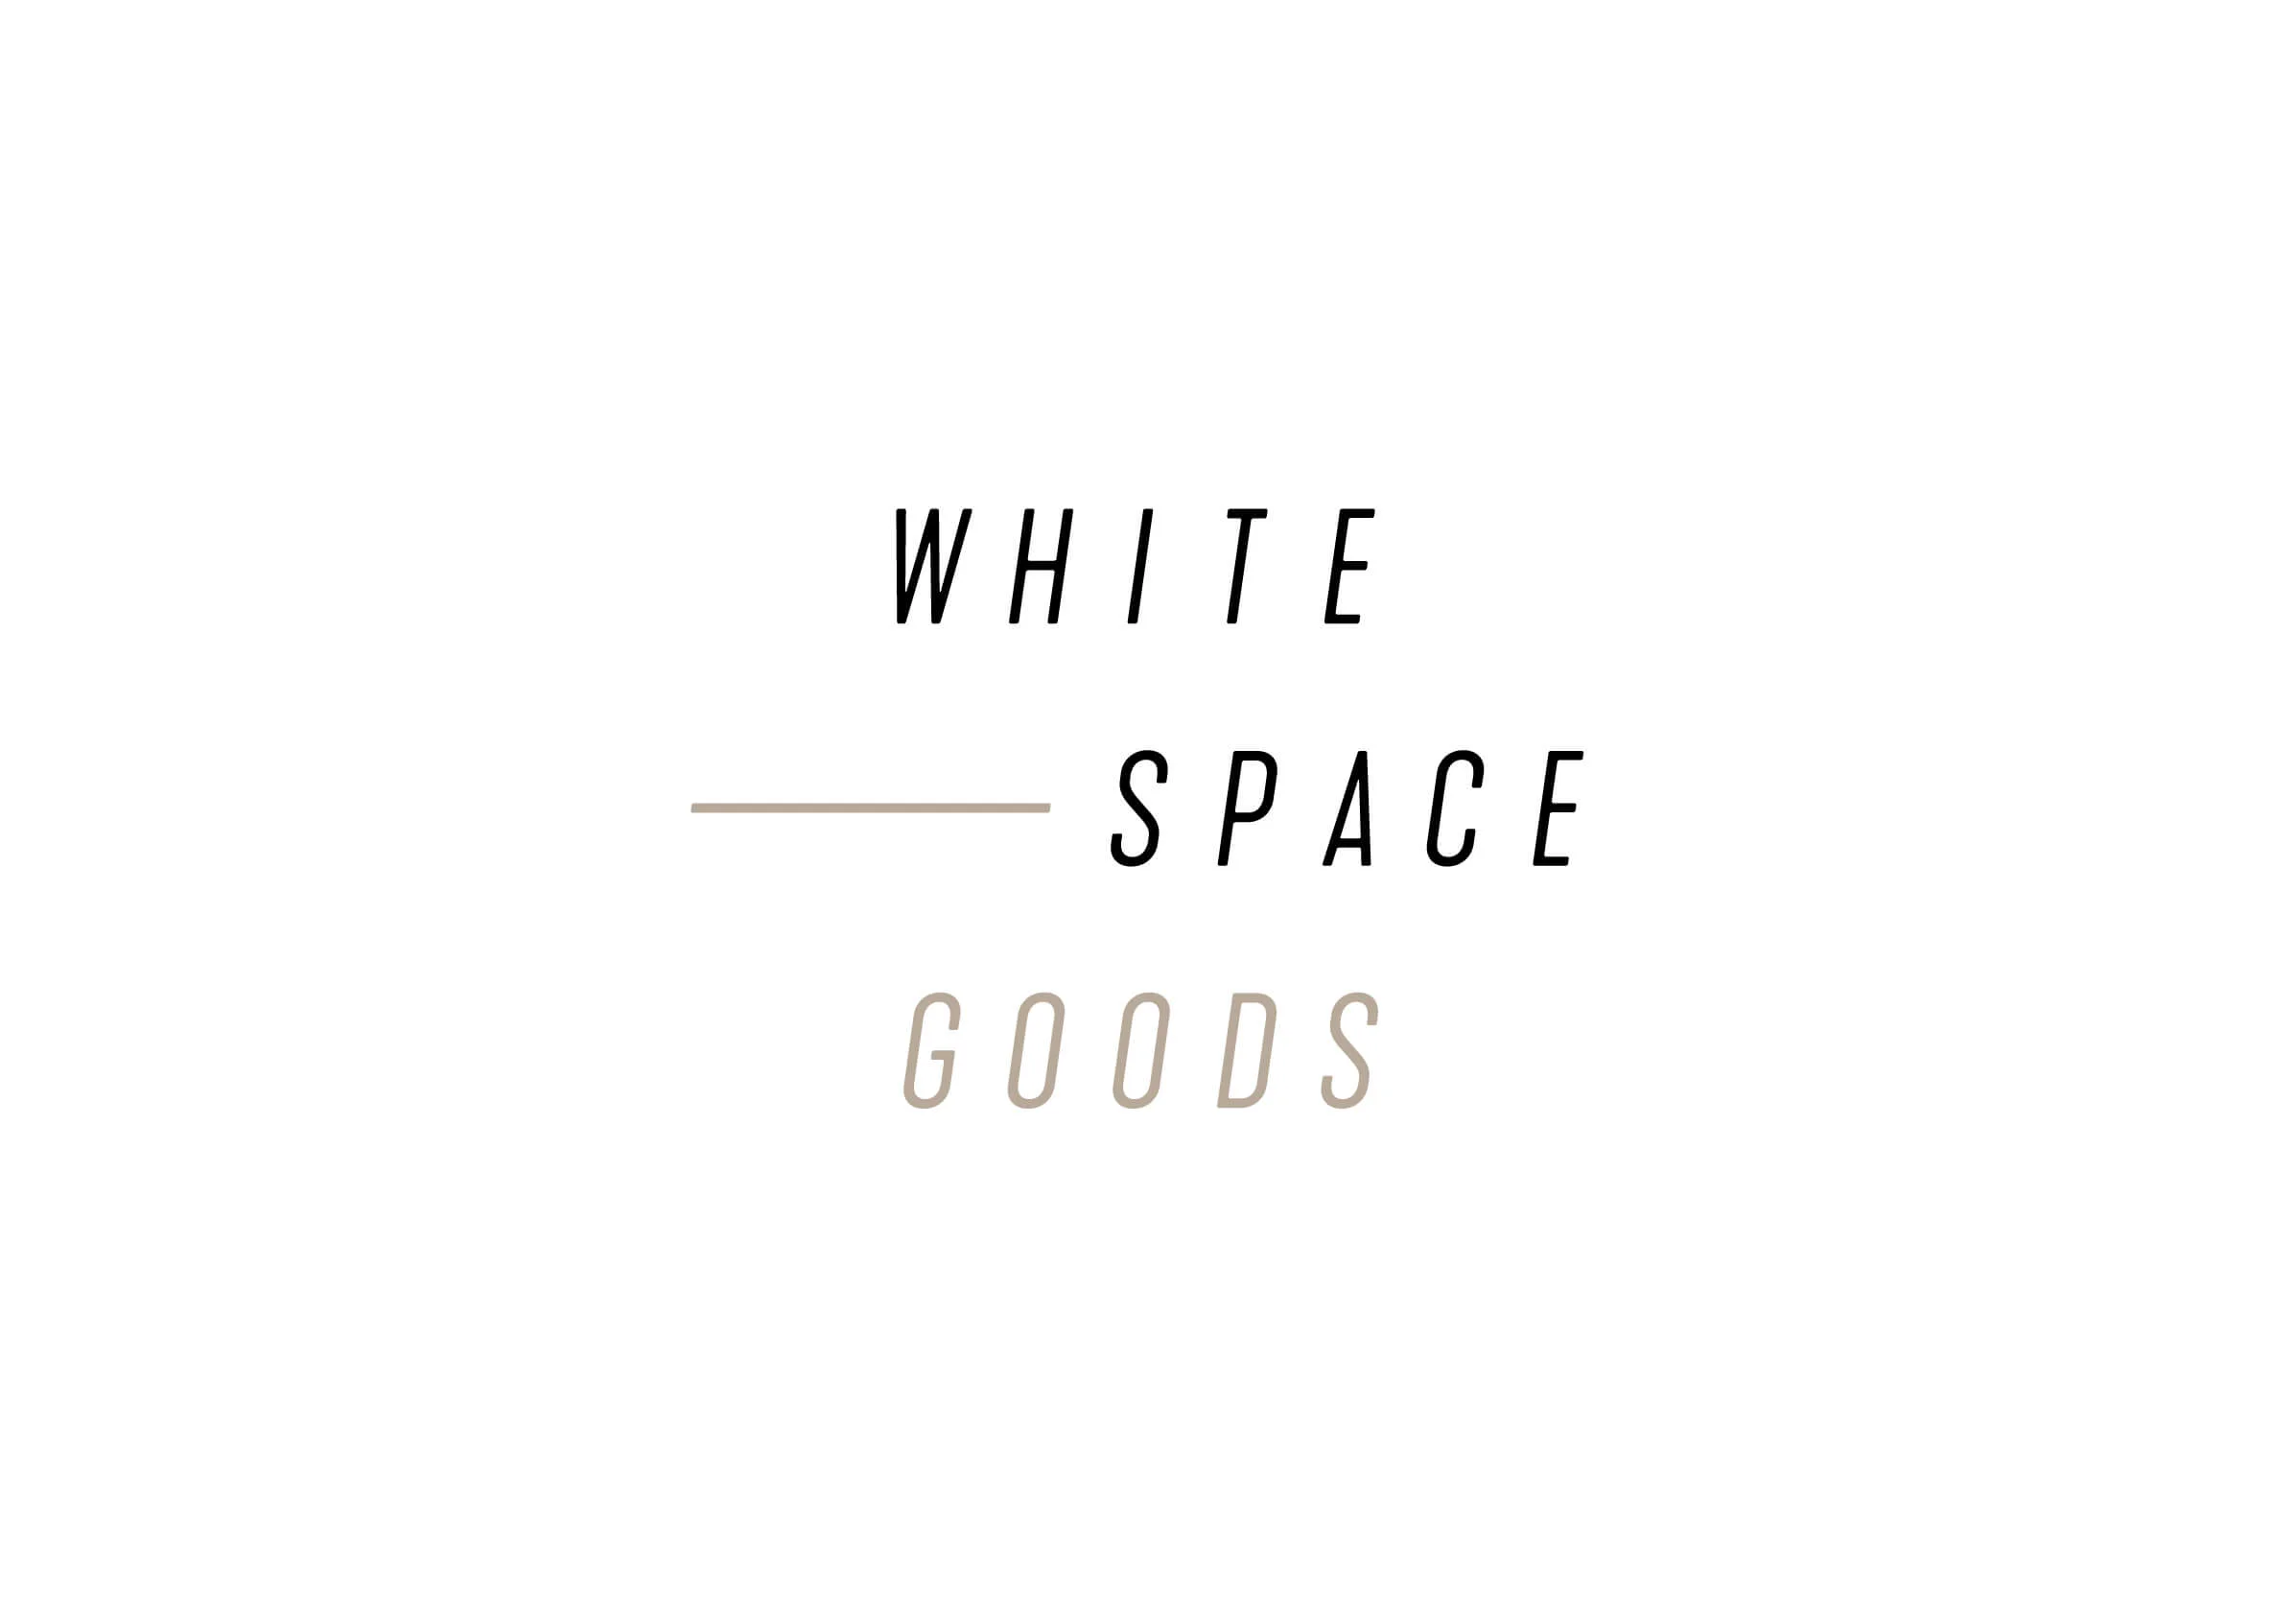 Whitespace Goods logo for Ottawa-based handmade knitware and decor by graphic designer idApostle